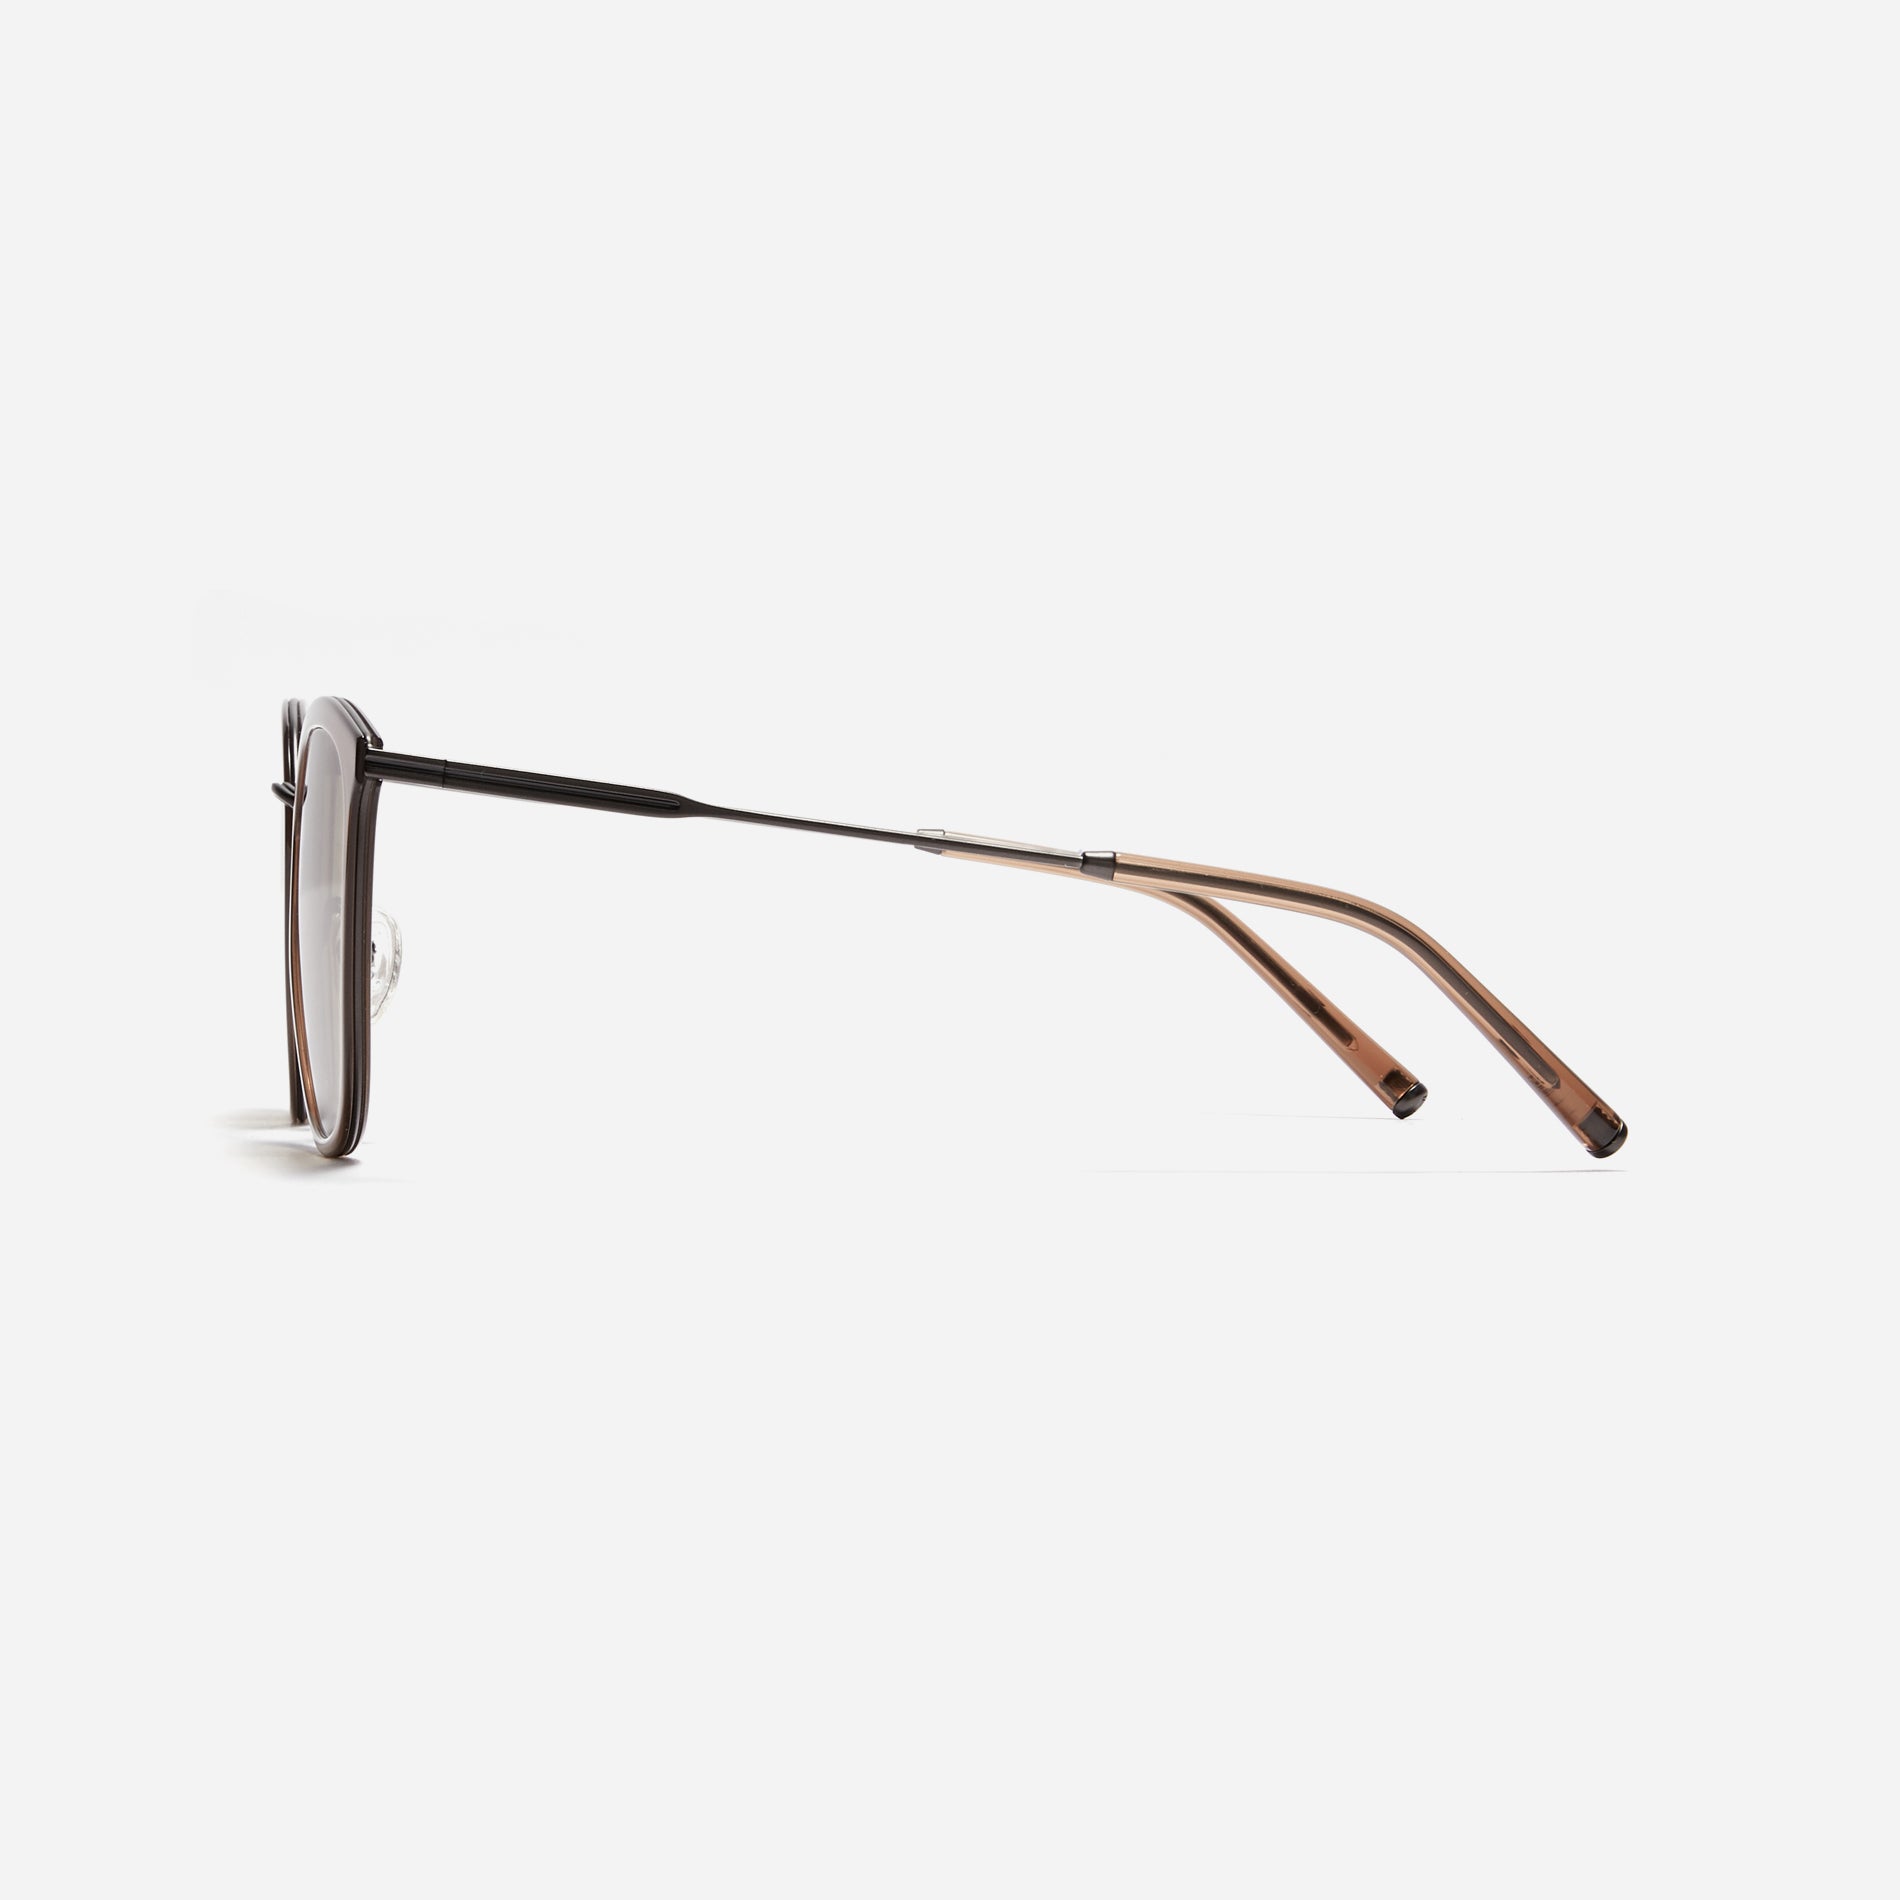  Combination sunglasses featuring flat lenses that ensure 100% UV protection, and unique nose bridge details